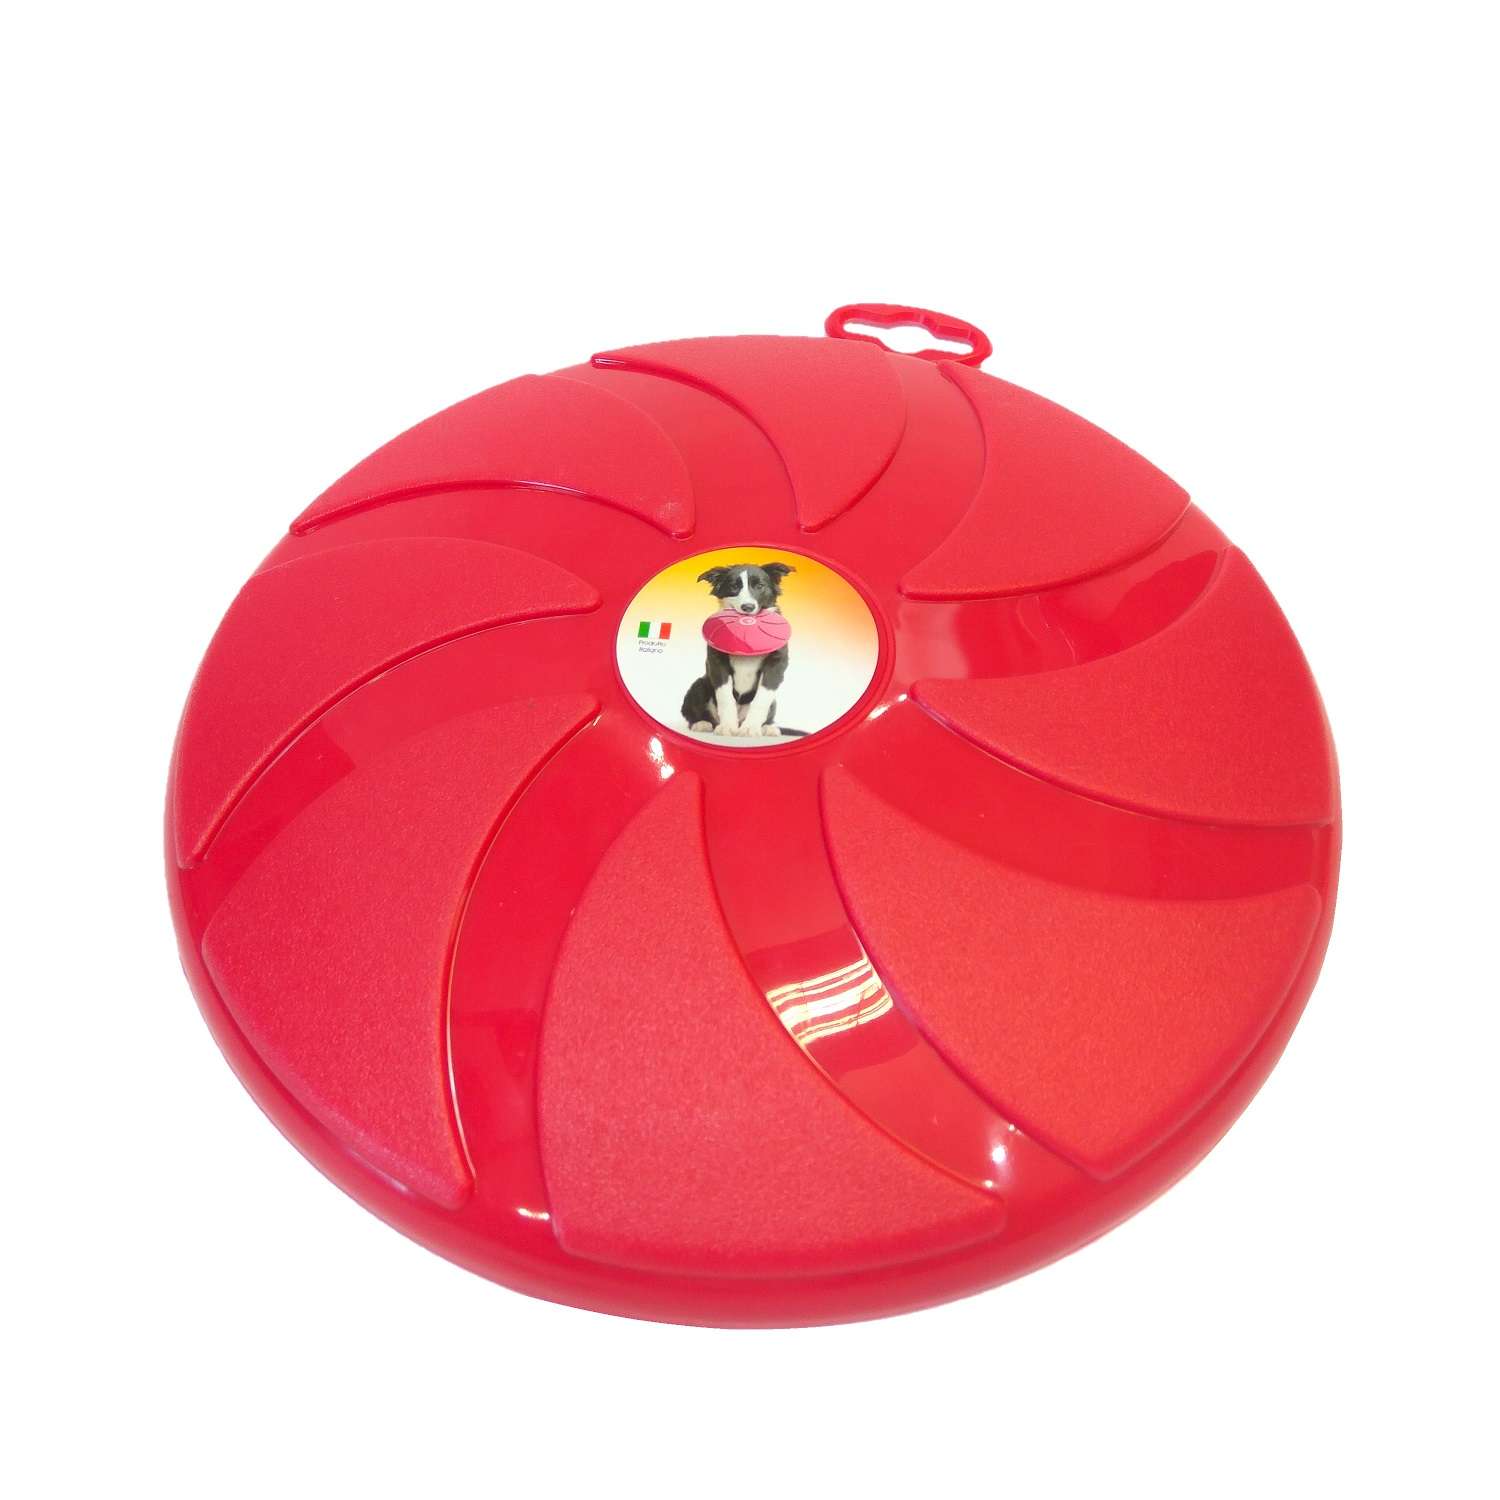 Игрушка для собак фрисби Lilli Pet Frisbee magic аппорт пуллер для собак - фото 1